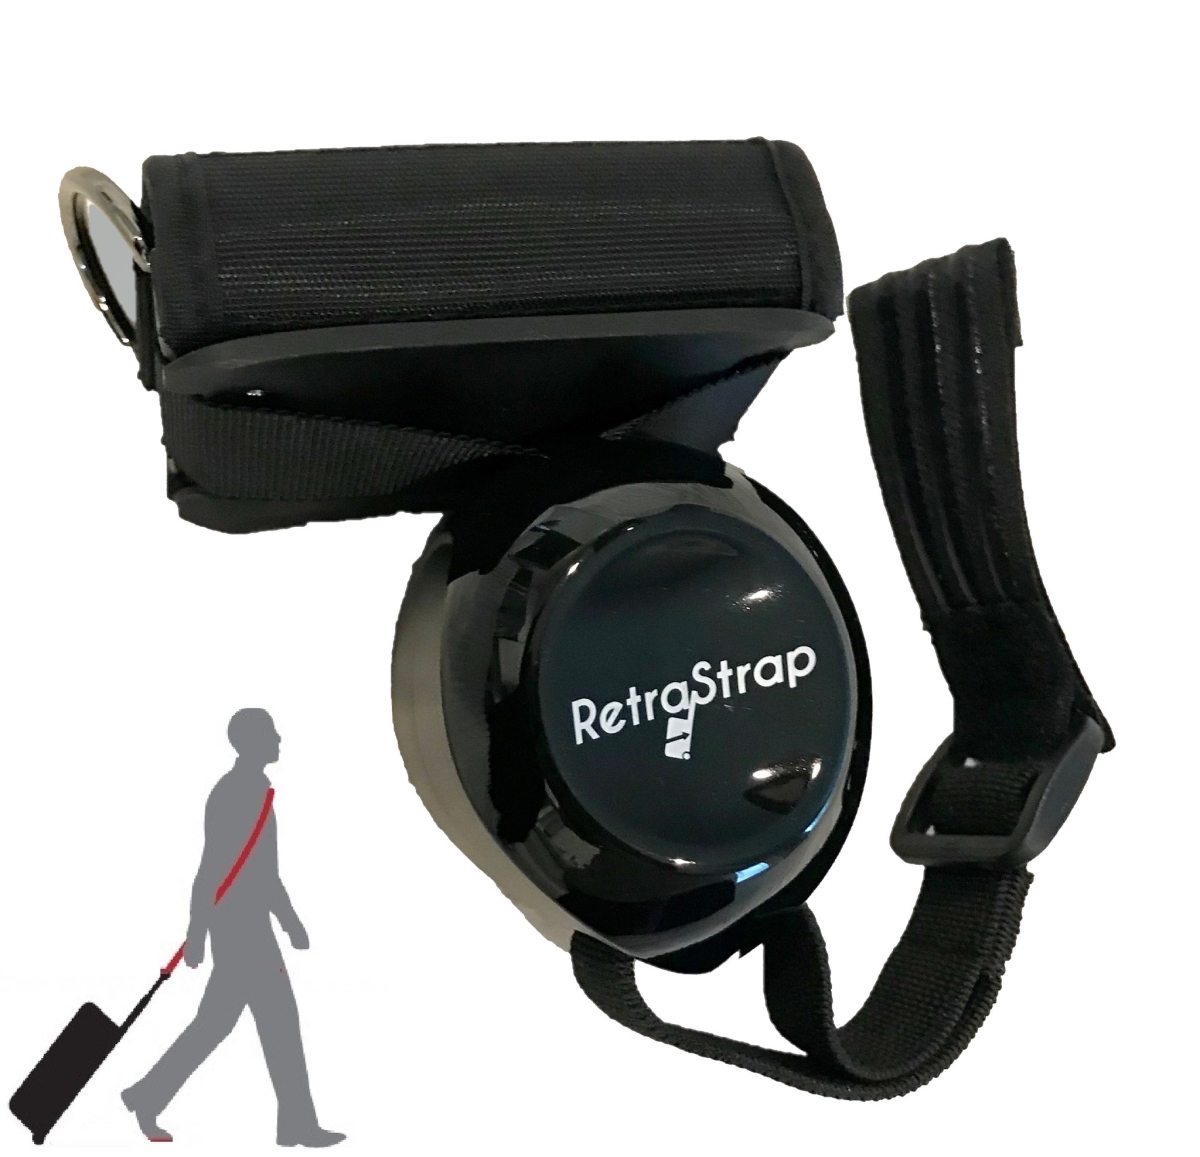 Rs001 Retractable Luggage Strap, Black